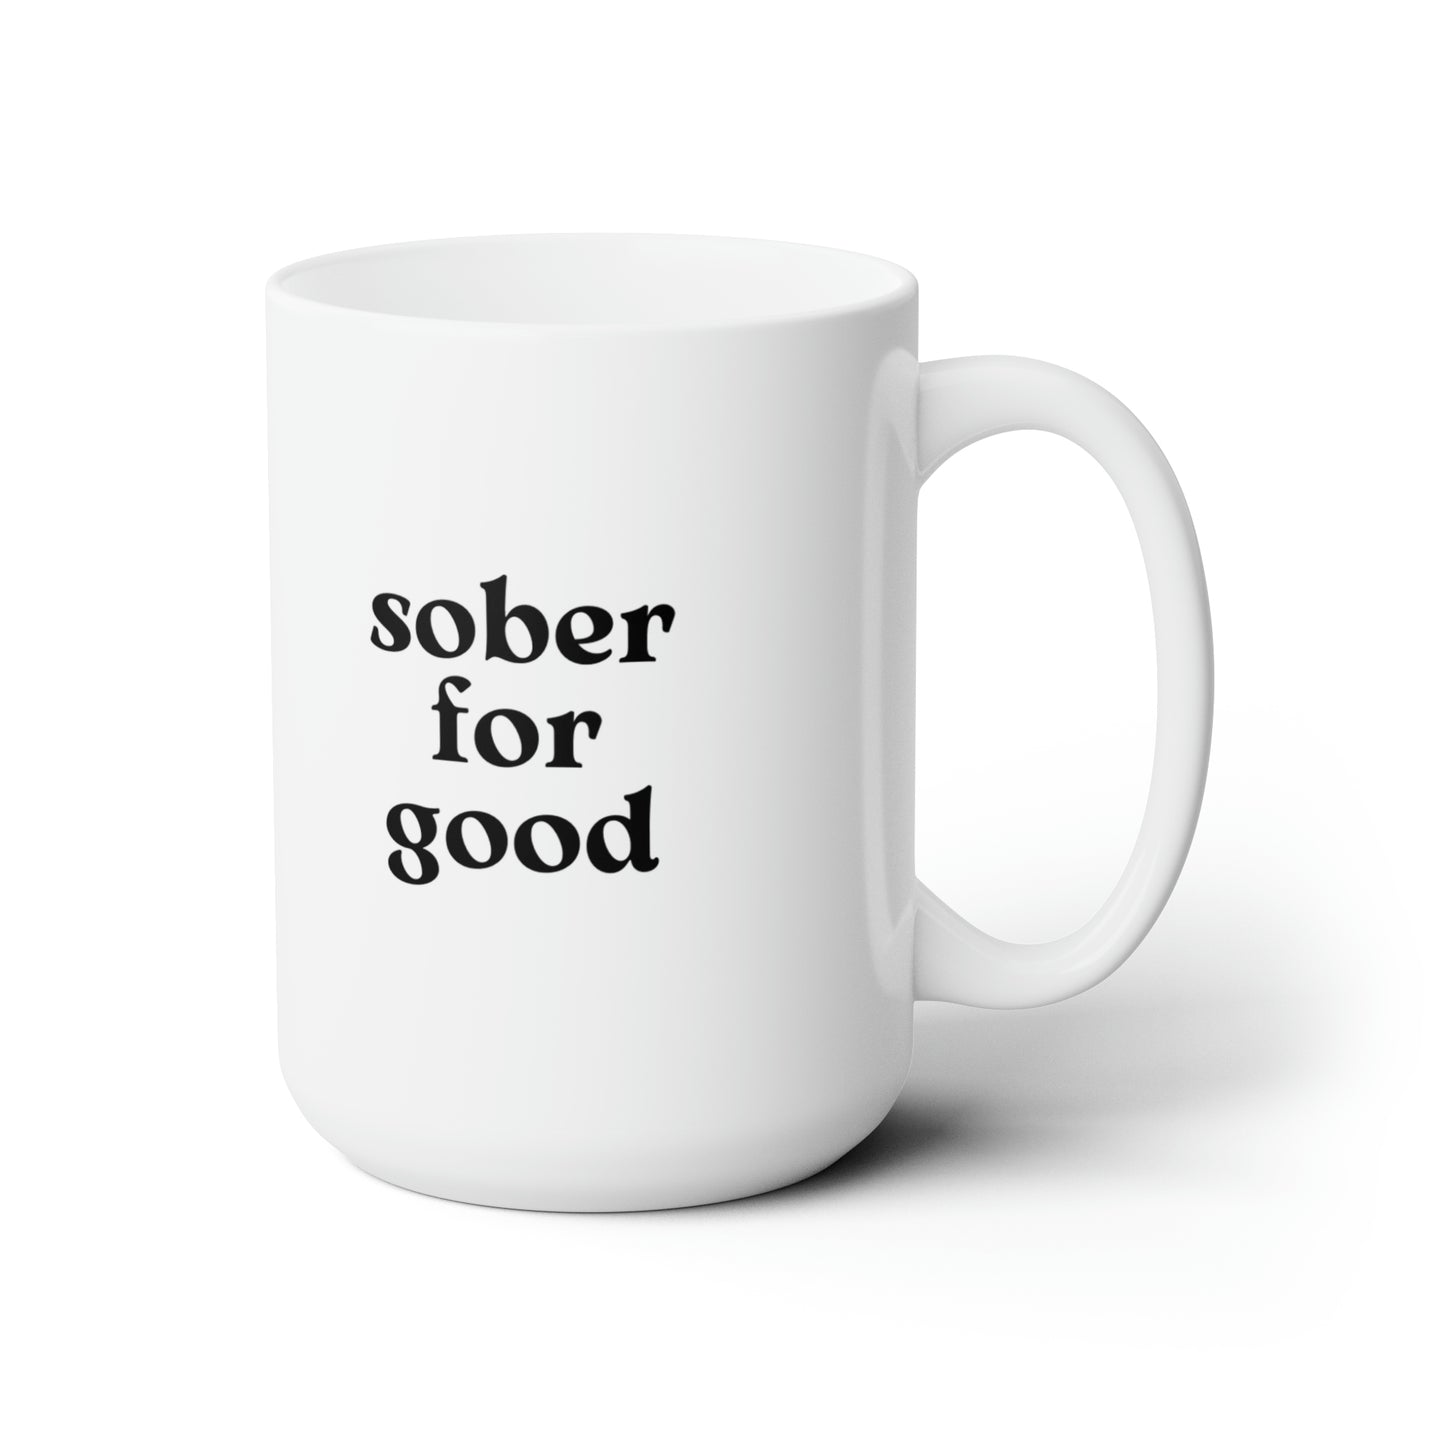 sober for good mug